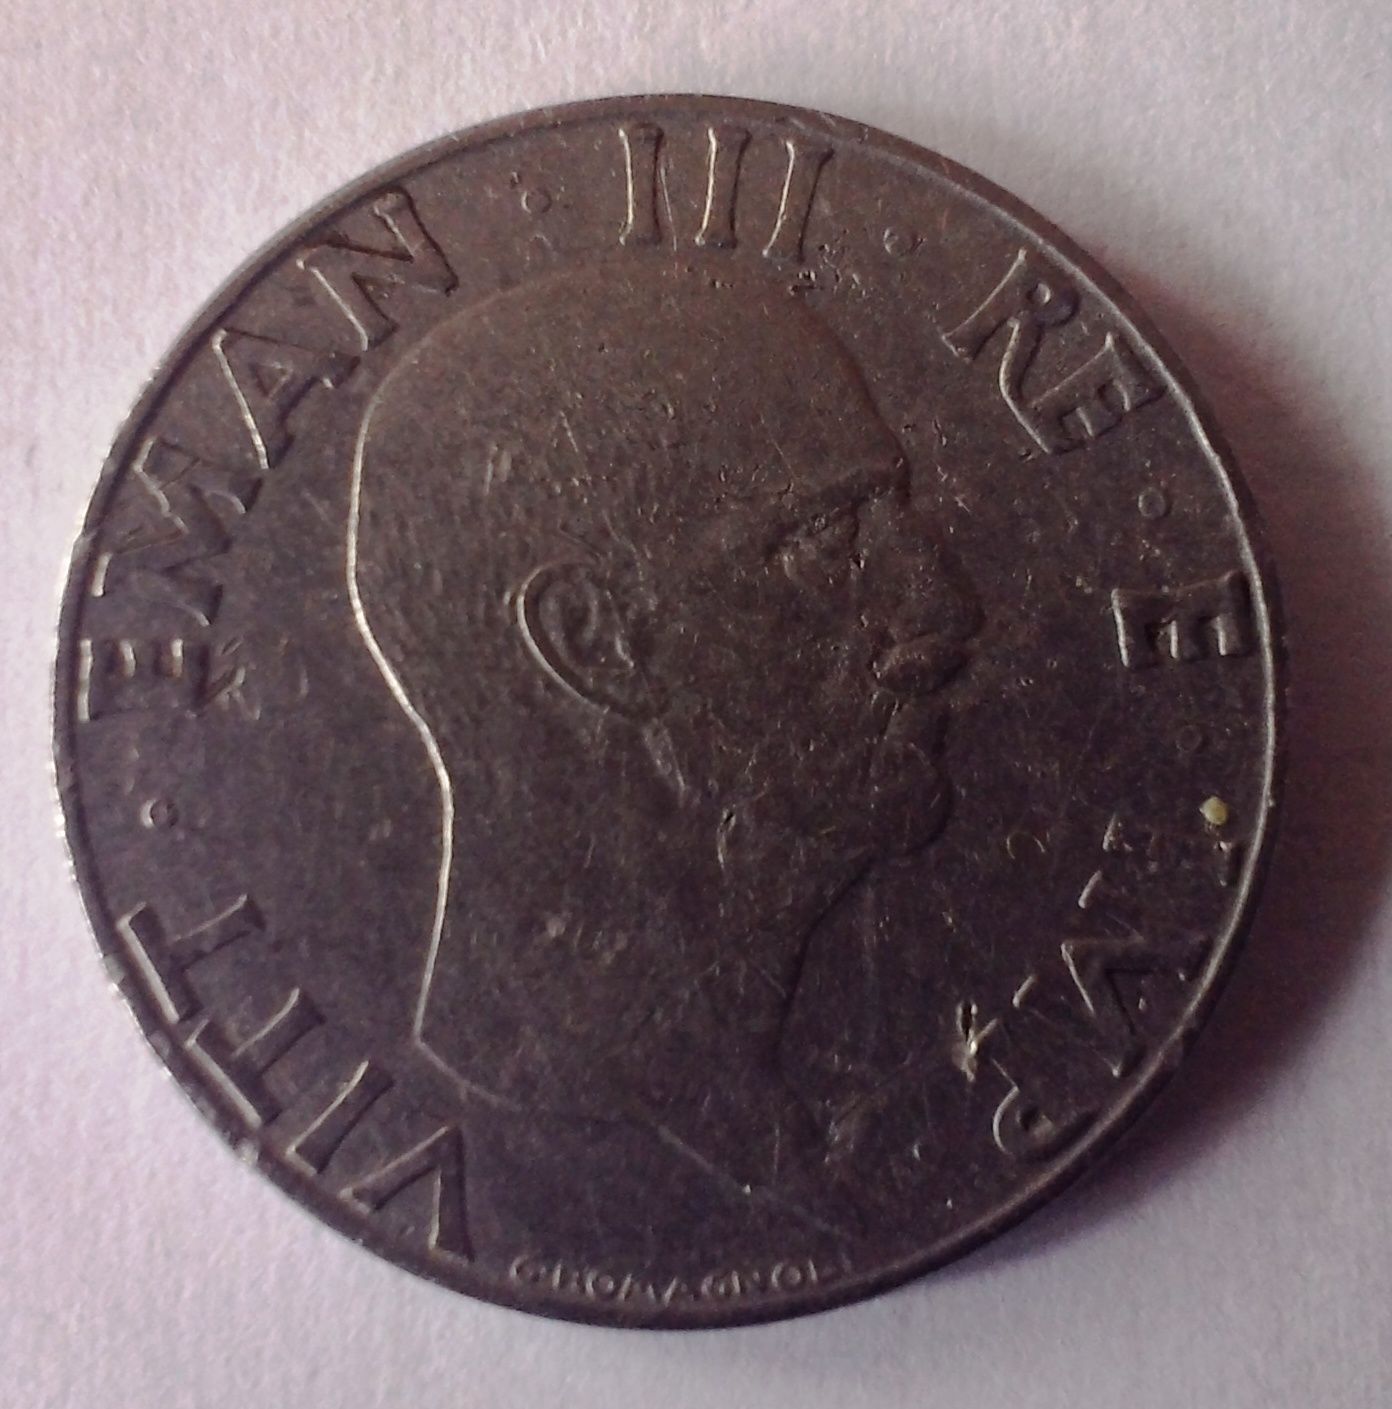 ITALY VITTORIO EMANUELE III 1941 50 CENTESIMI coin free shipping monument - $4.00